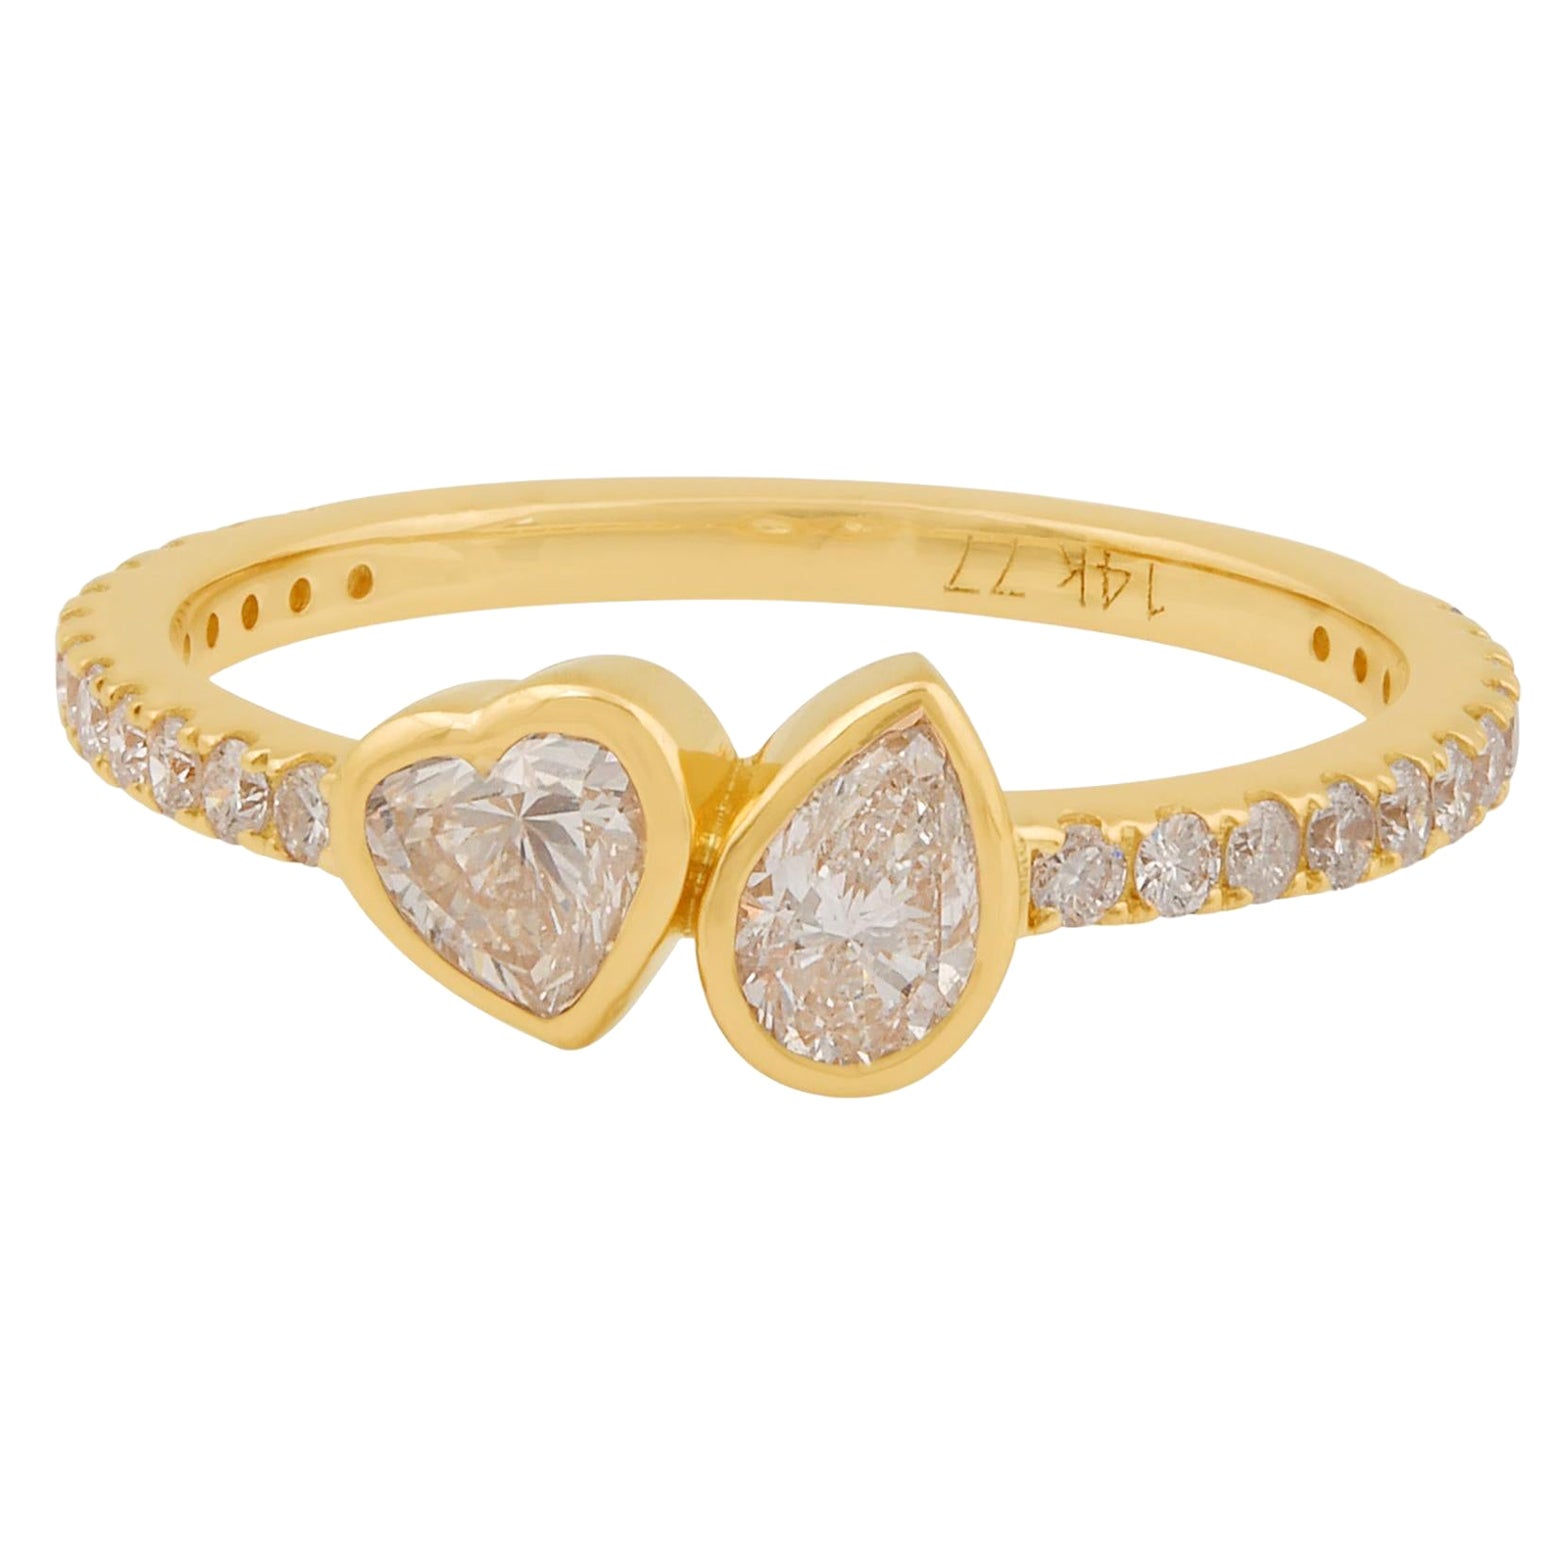 0.77 Carat Pear & Heart Cut Diamond Band Ring 14k Yellow Gold Handmade Jewelry